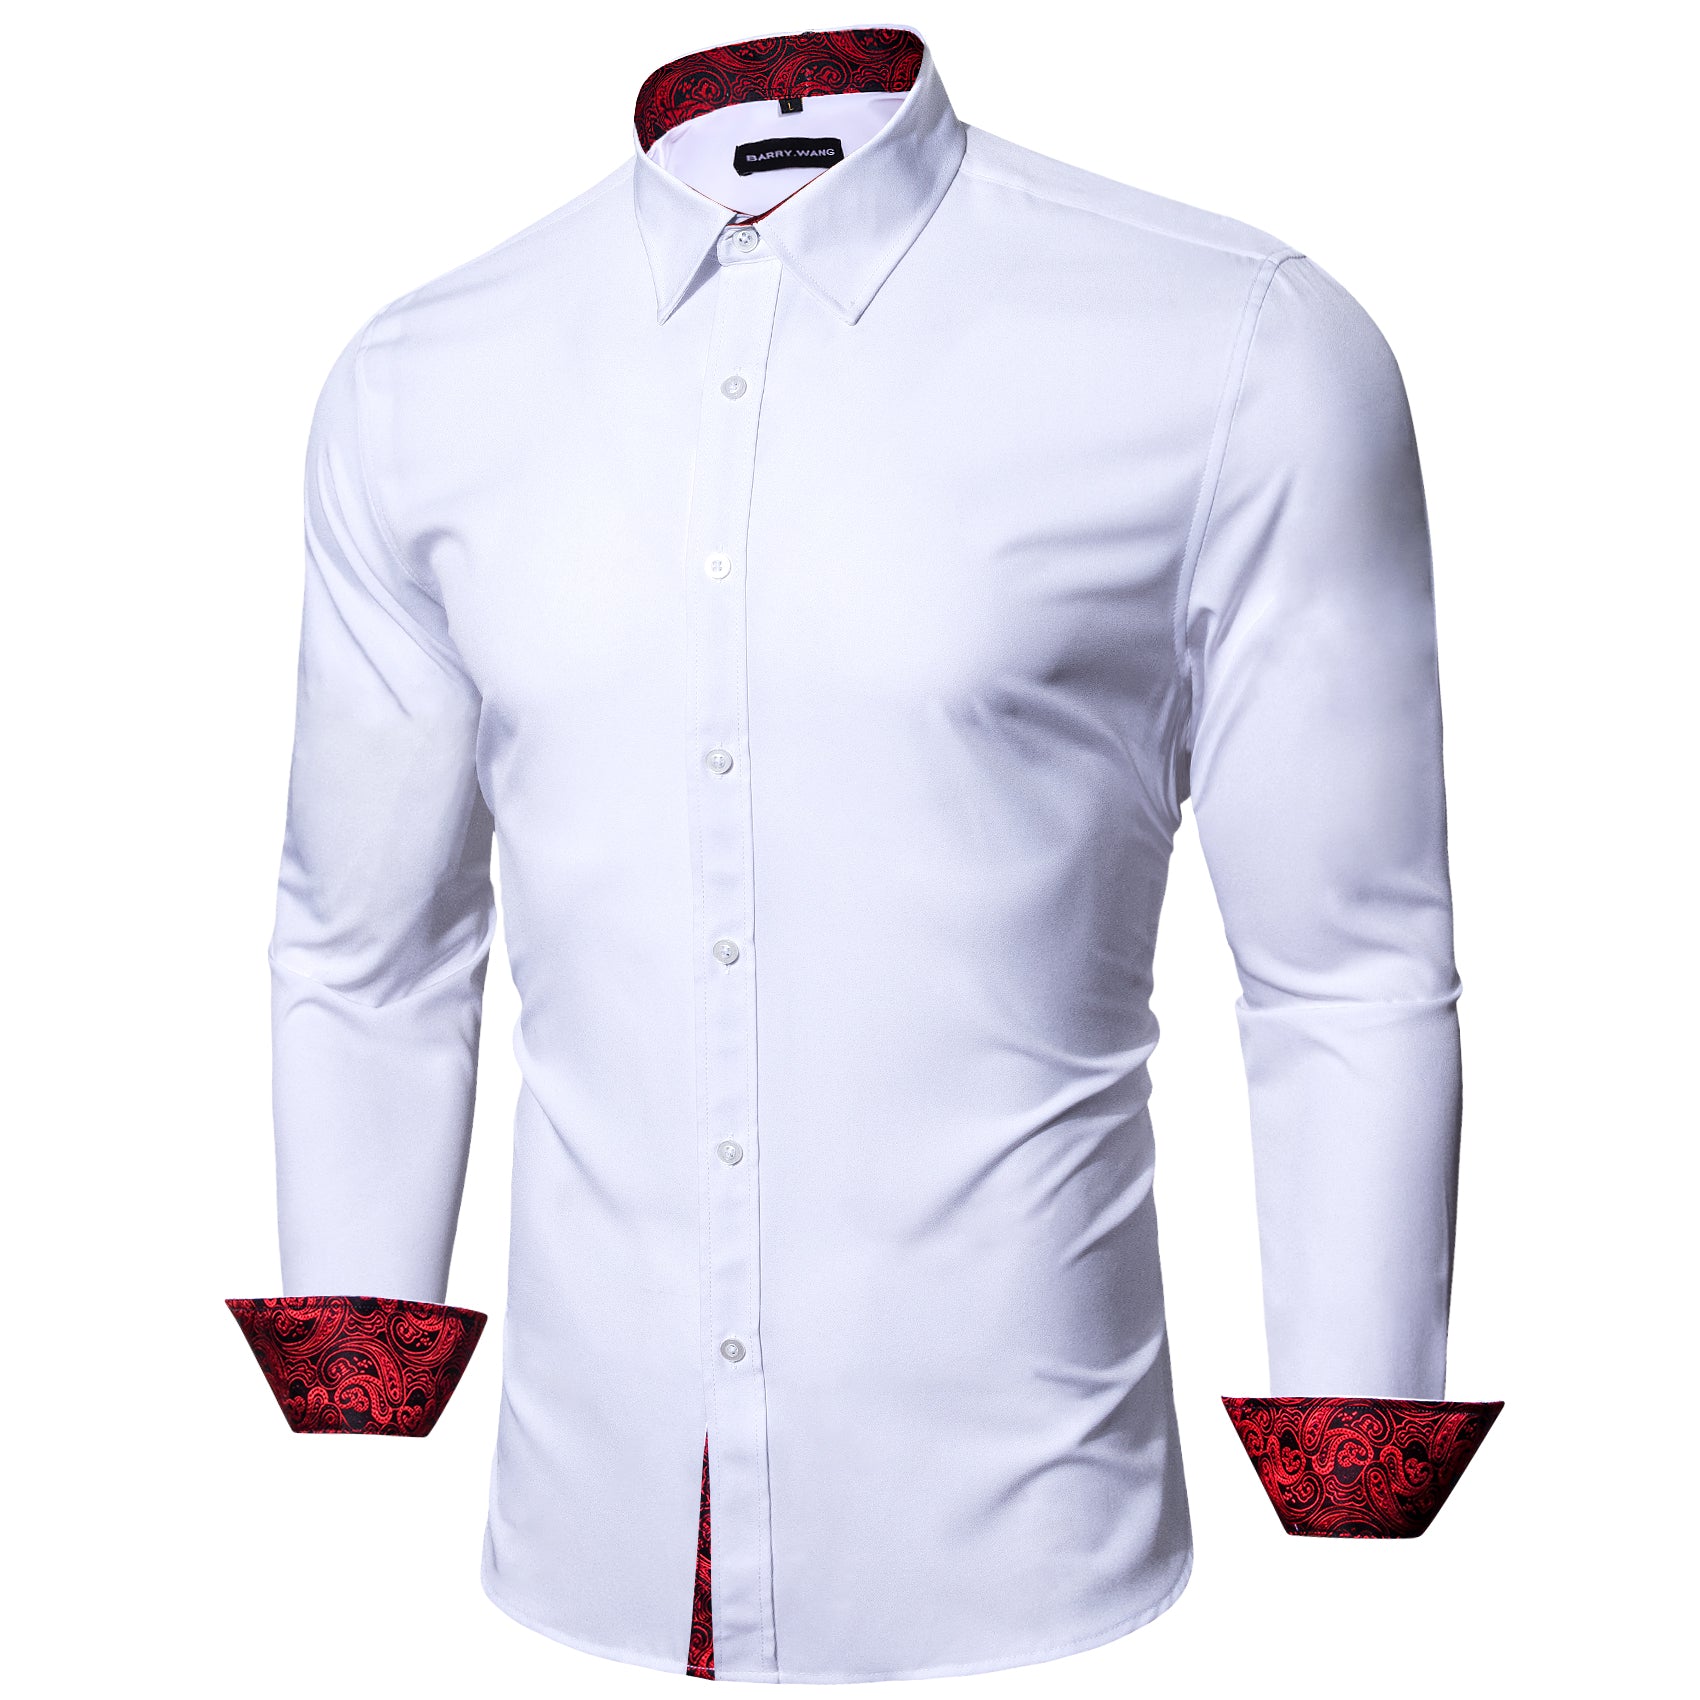 Barry.wang Fromal White Red Splicing Men's Shirt